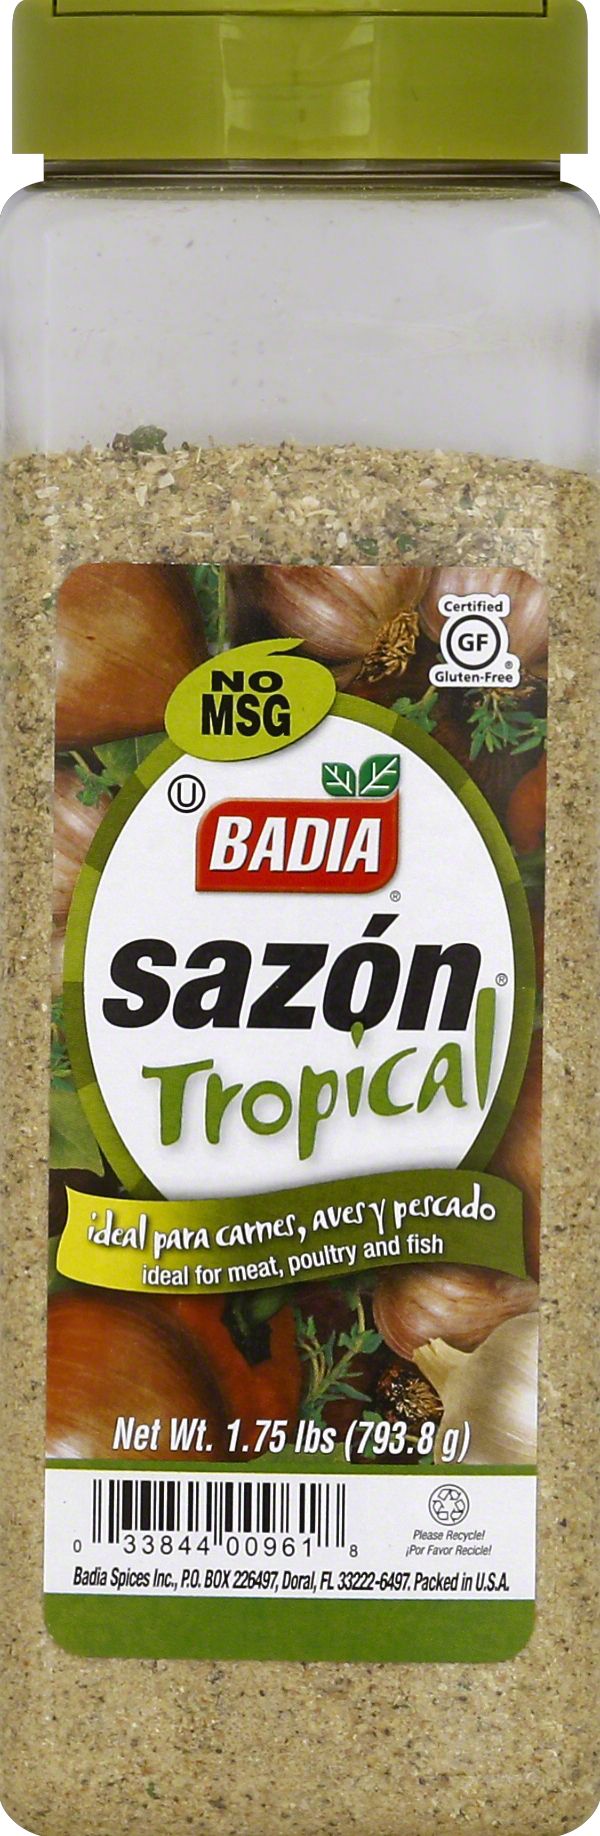 Badia Spices, Inc.